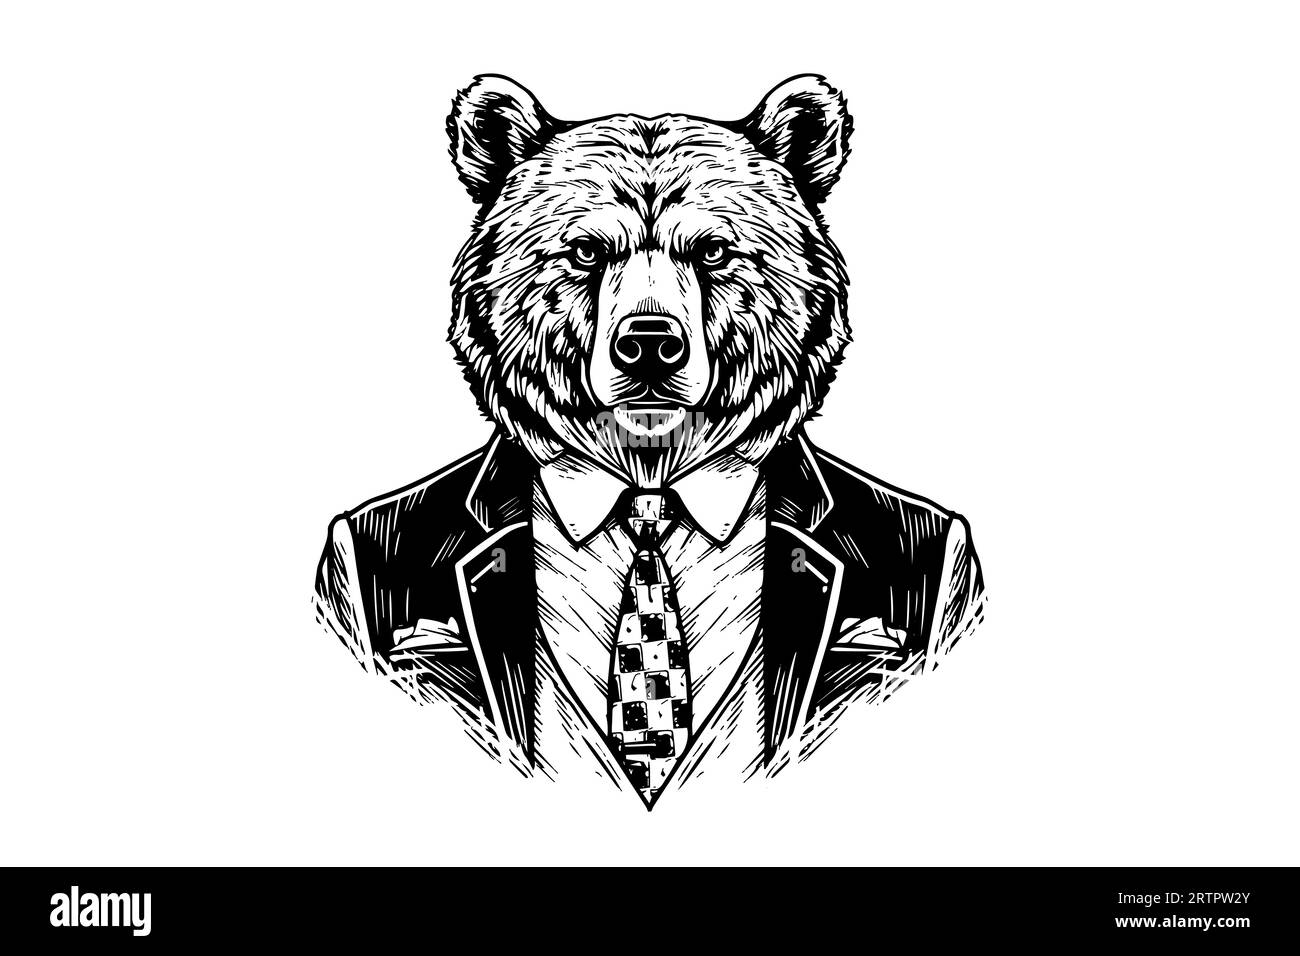 Bear in a tuxedo logotype vector engraving style illustration. Stock Vector